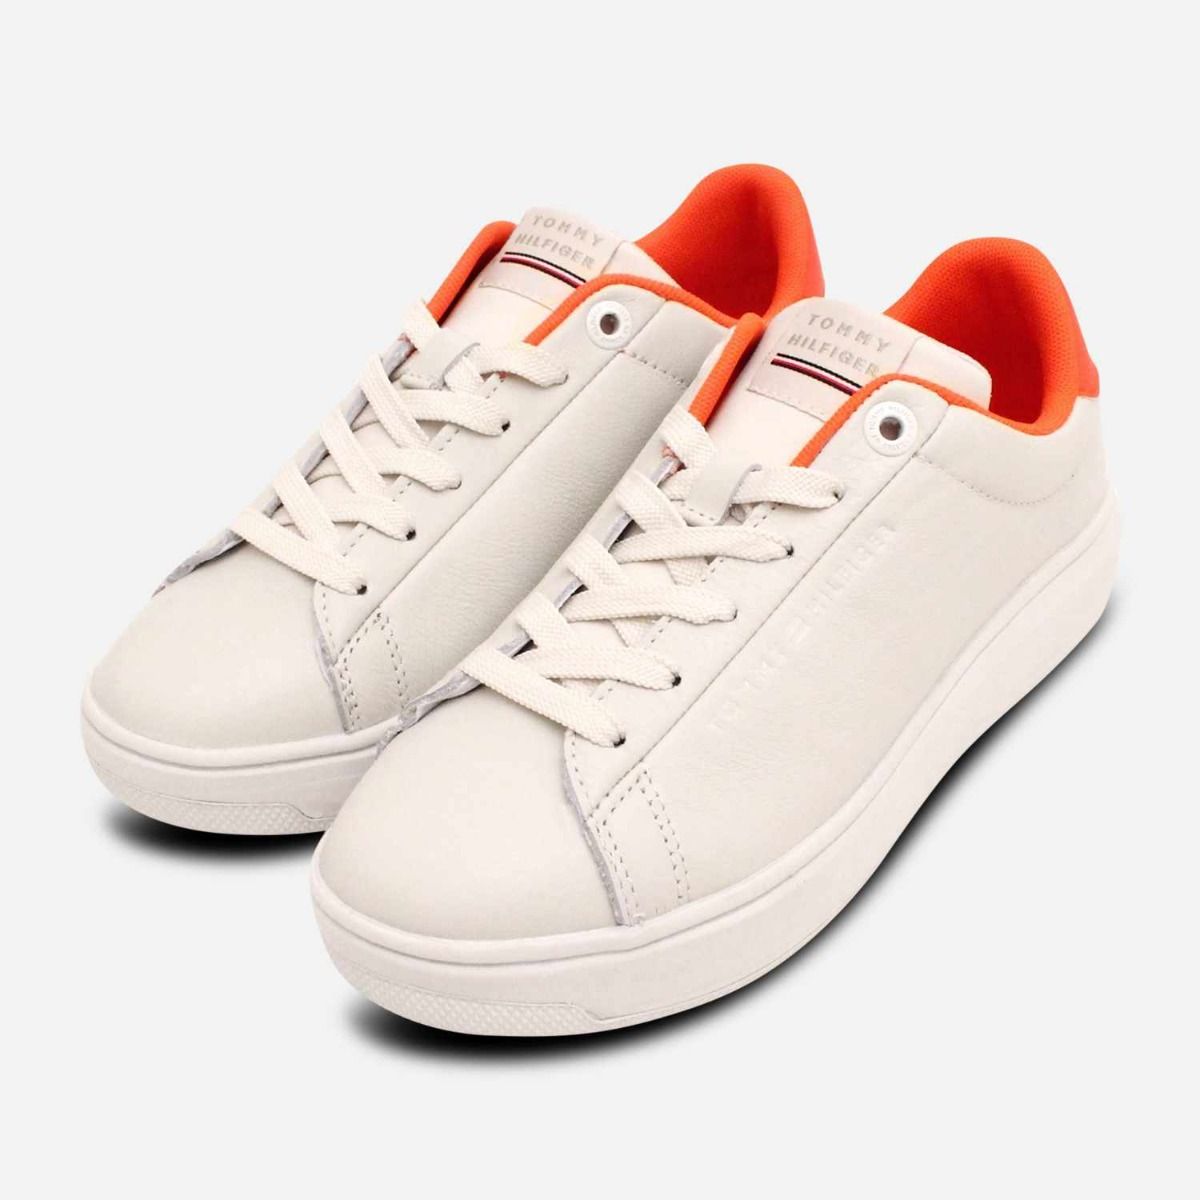 collegegeld Zeestraat Beyond Tommy Hilfiger Premium Leather Sneakers with Coral Heel